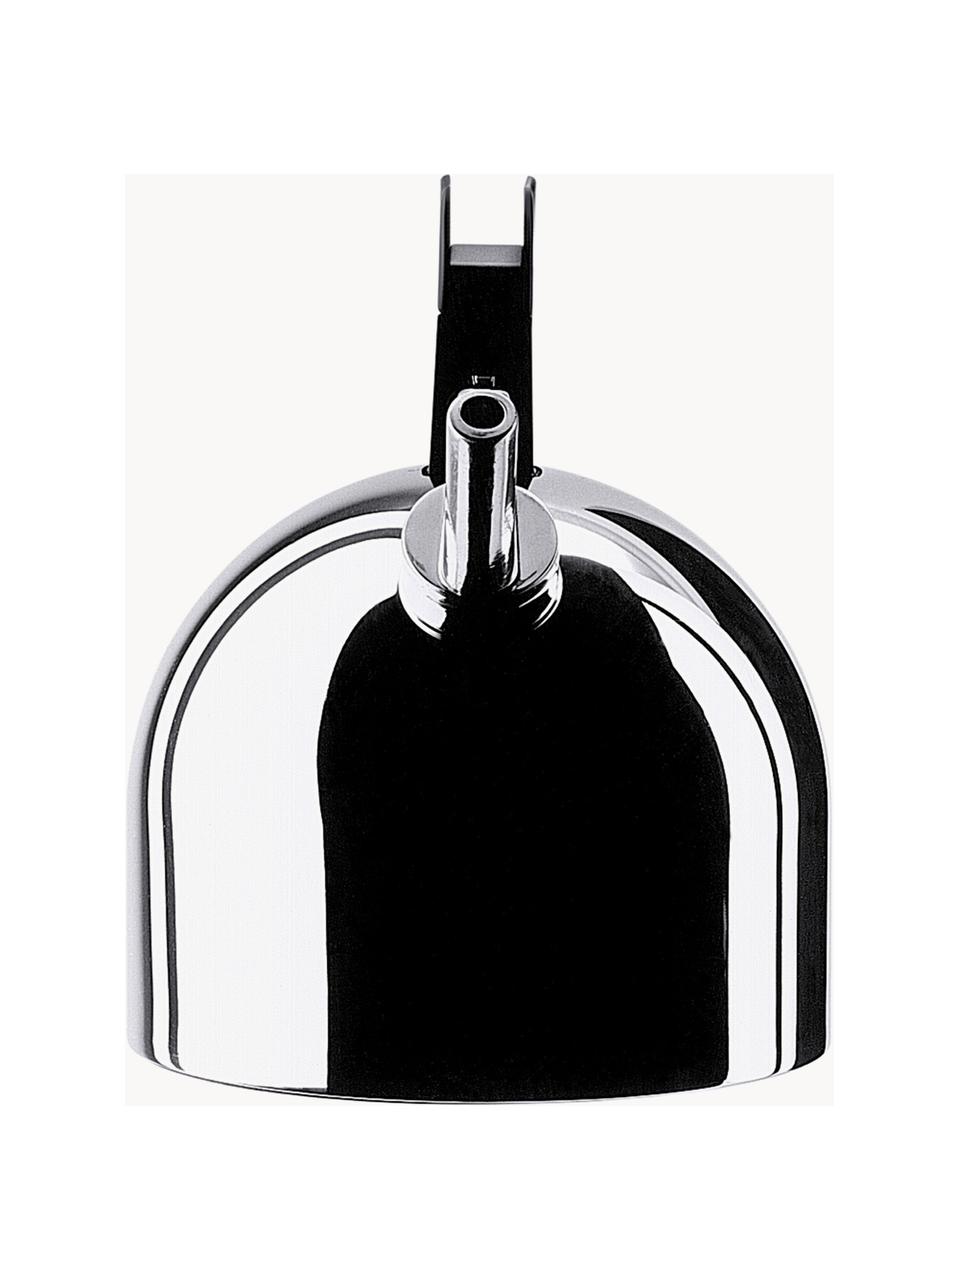 Wasserkocher Kettle, 2 L, Griff: Kunststoff, Gehäuse: Edelstahl 18/10, hochglan, Silberfarben, 2 L